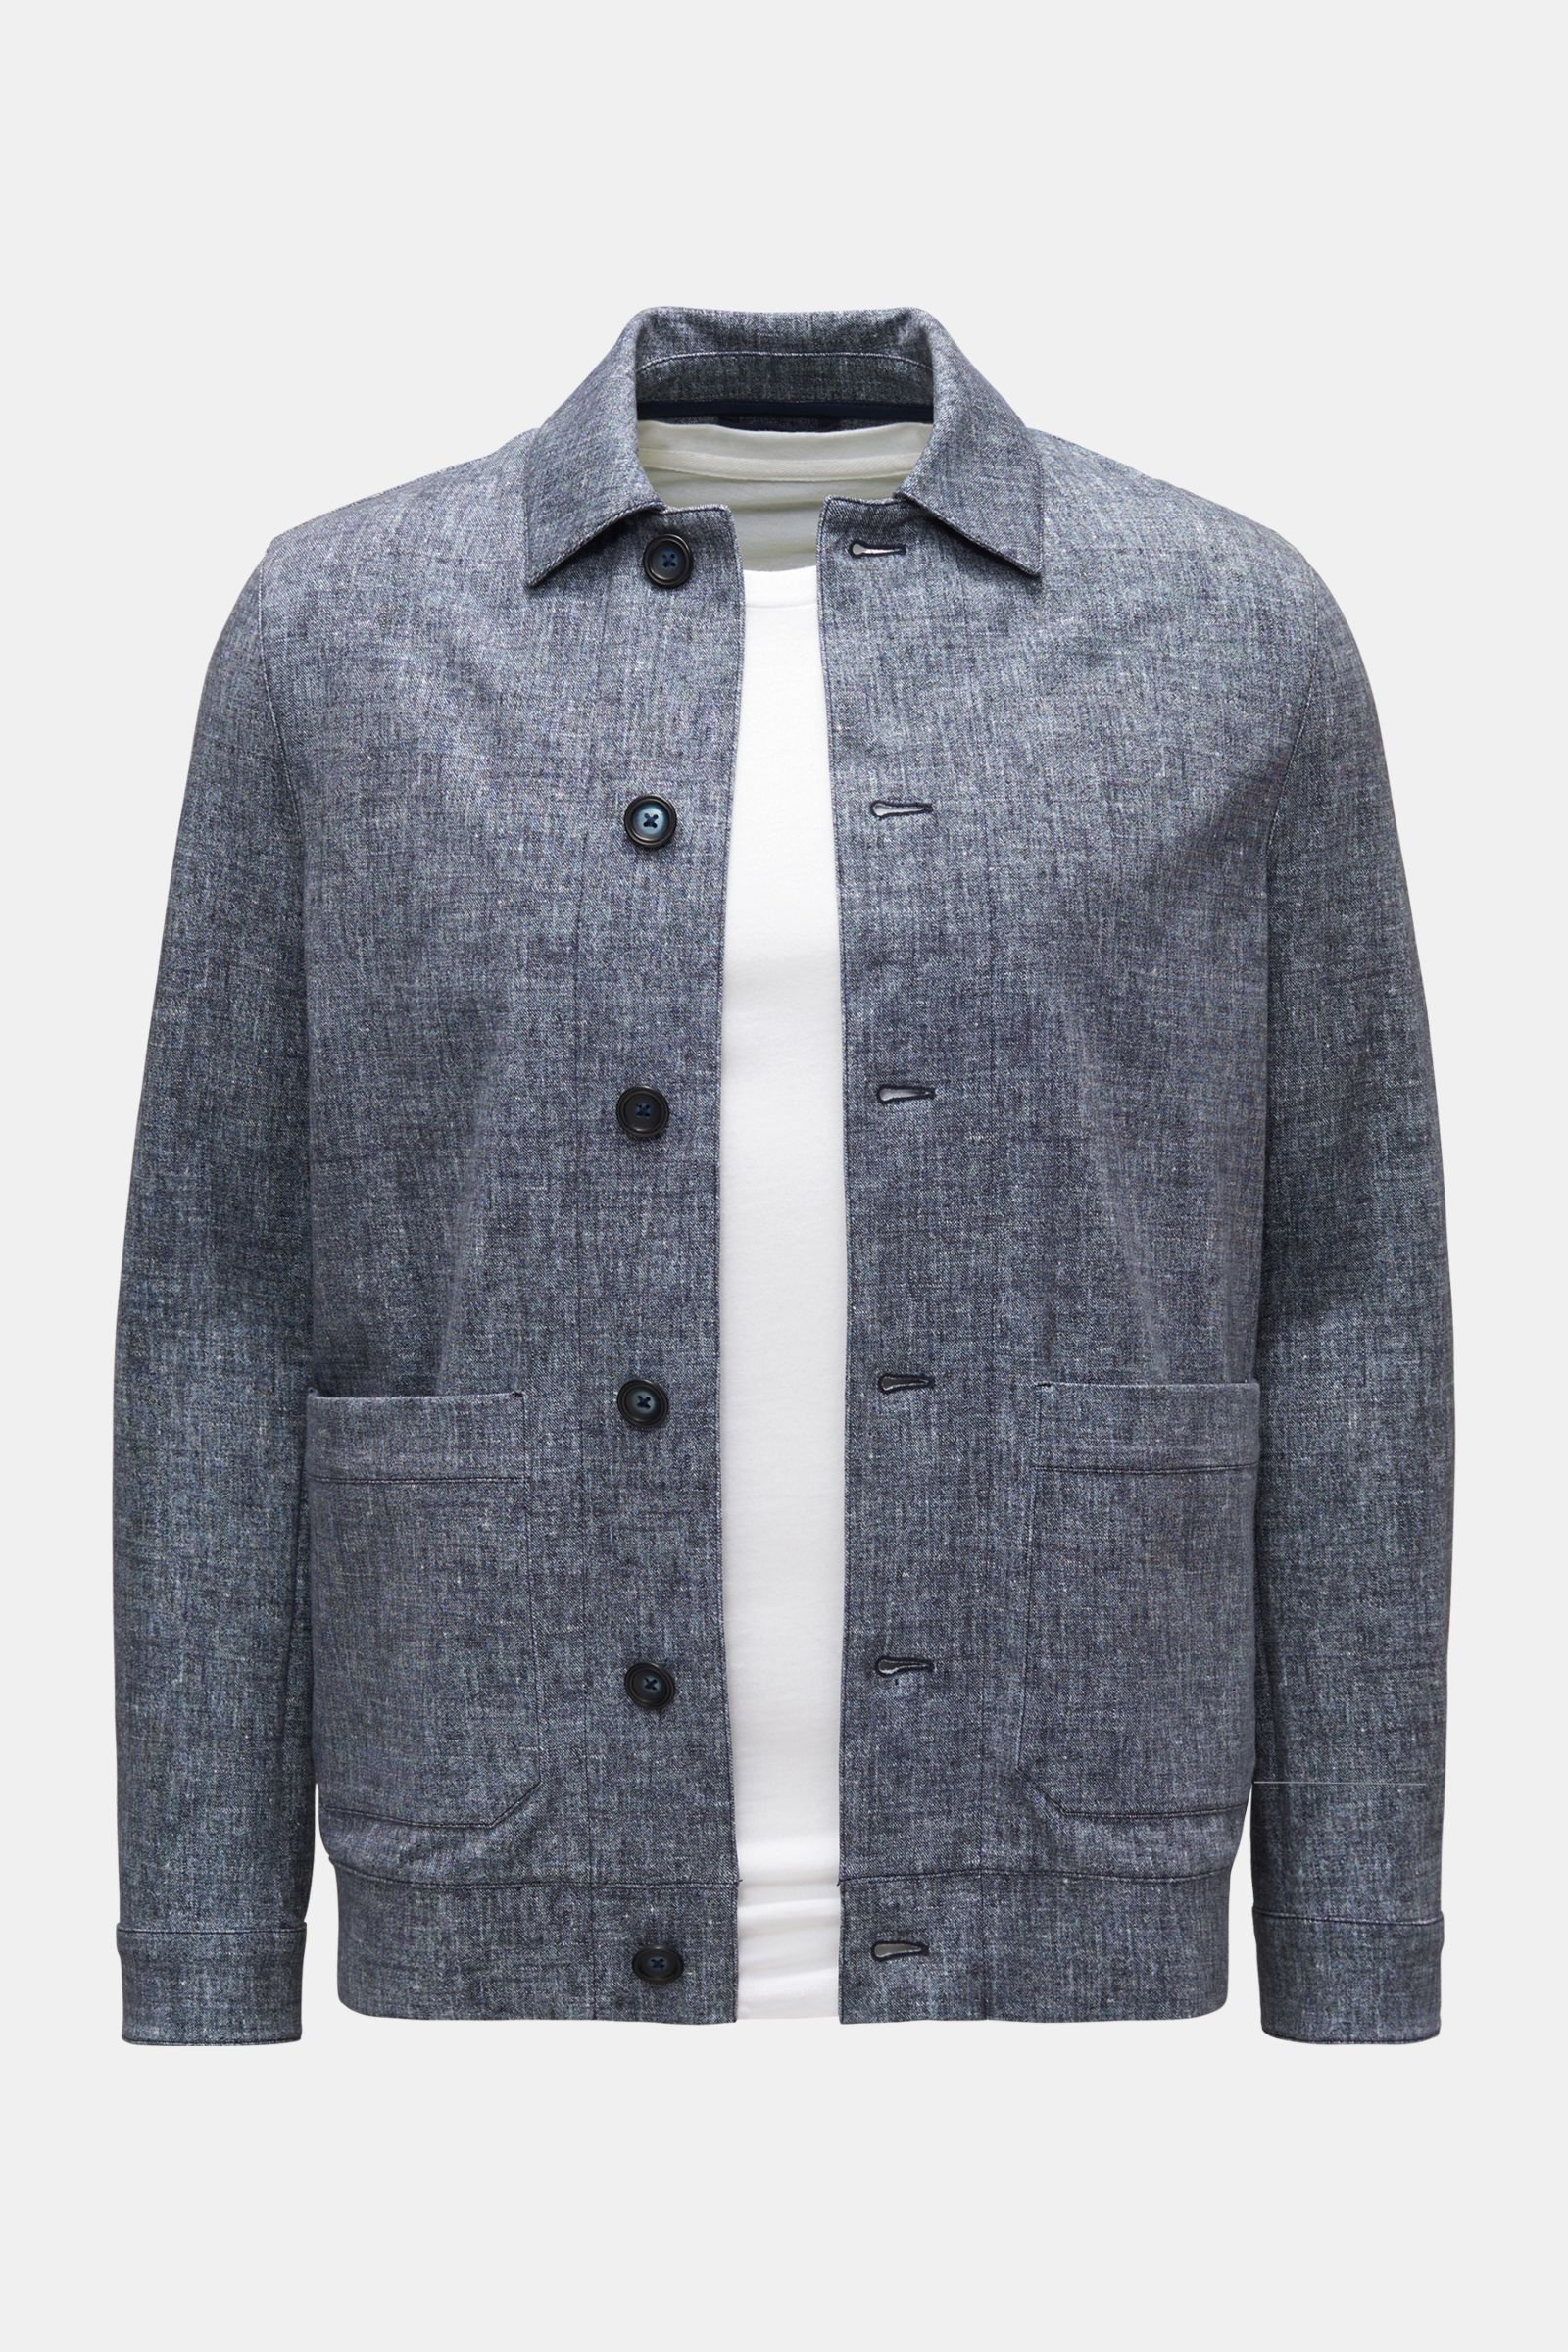 Jersey overshirt grey-blue